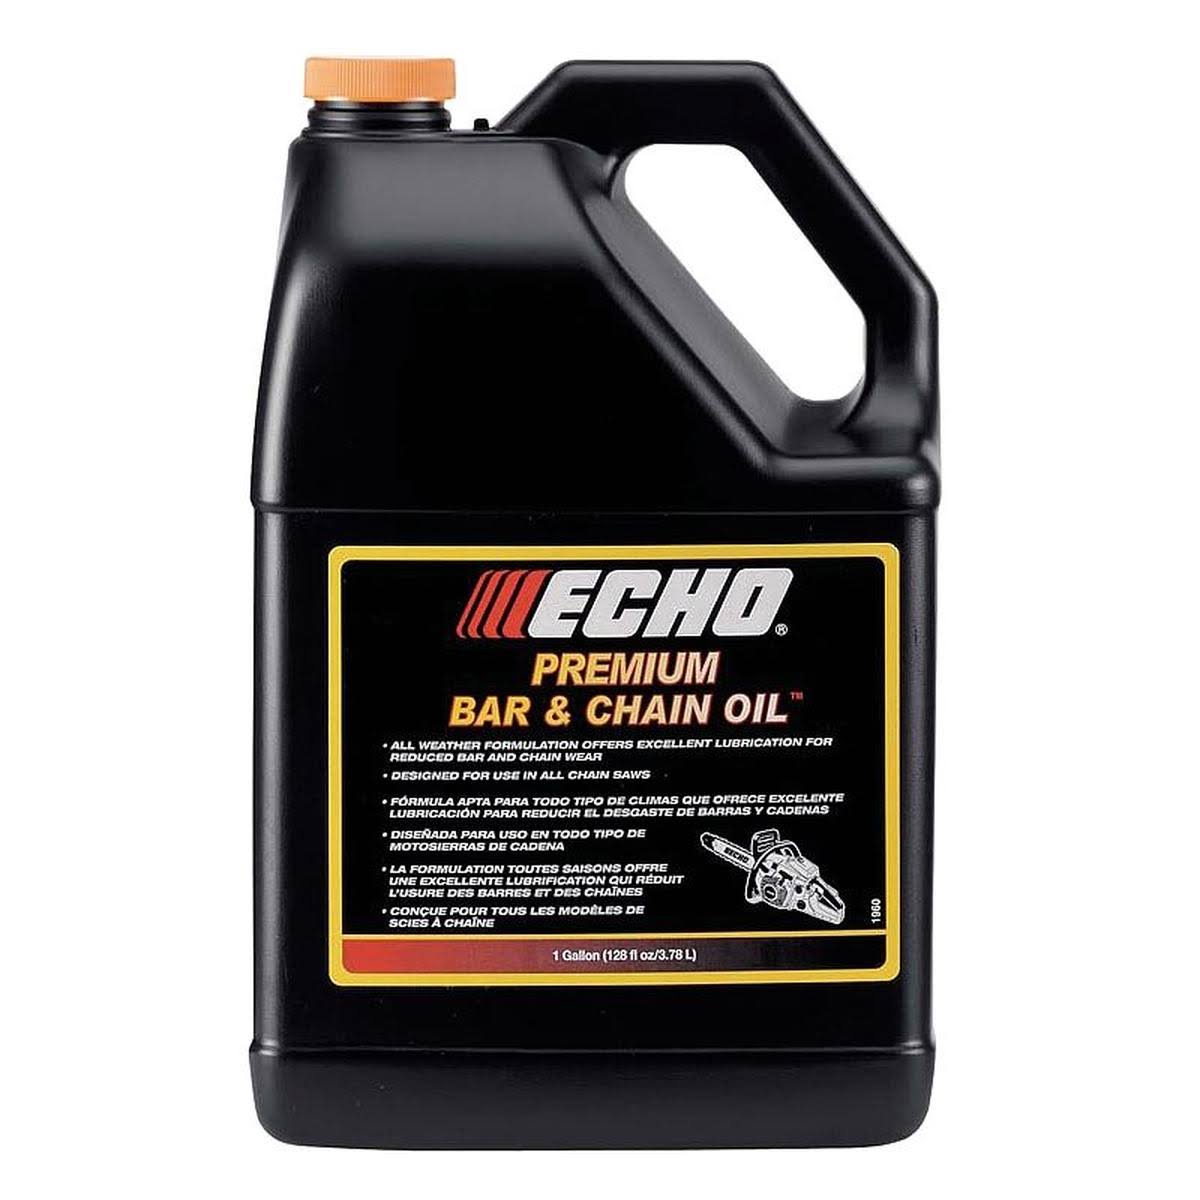 ECHO Bar and Chain Oil - 1 Gallon